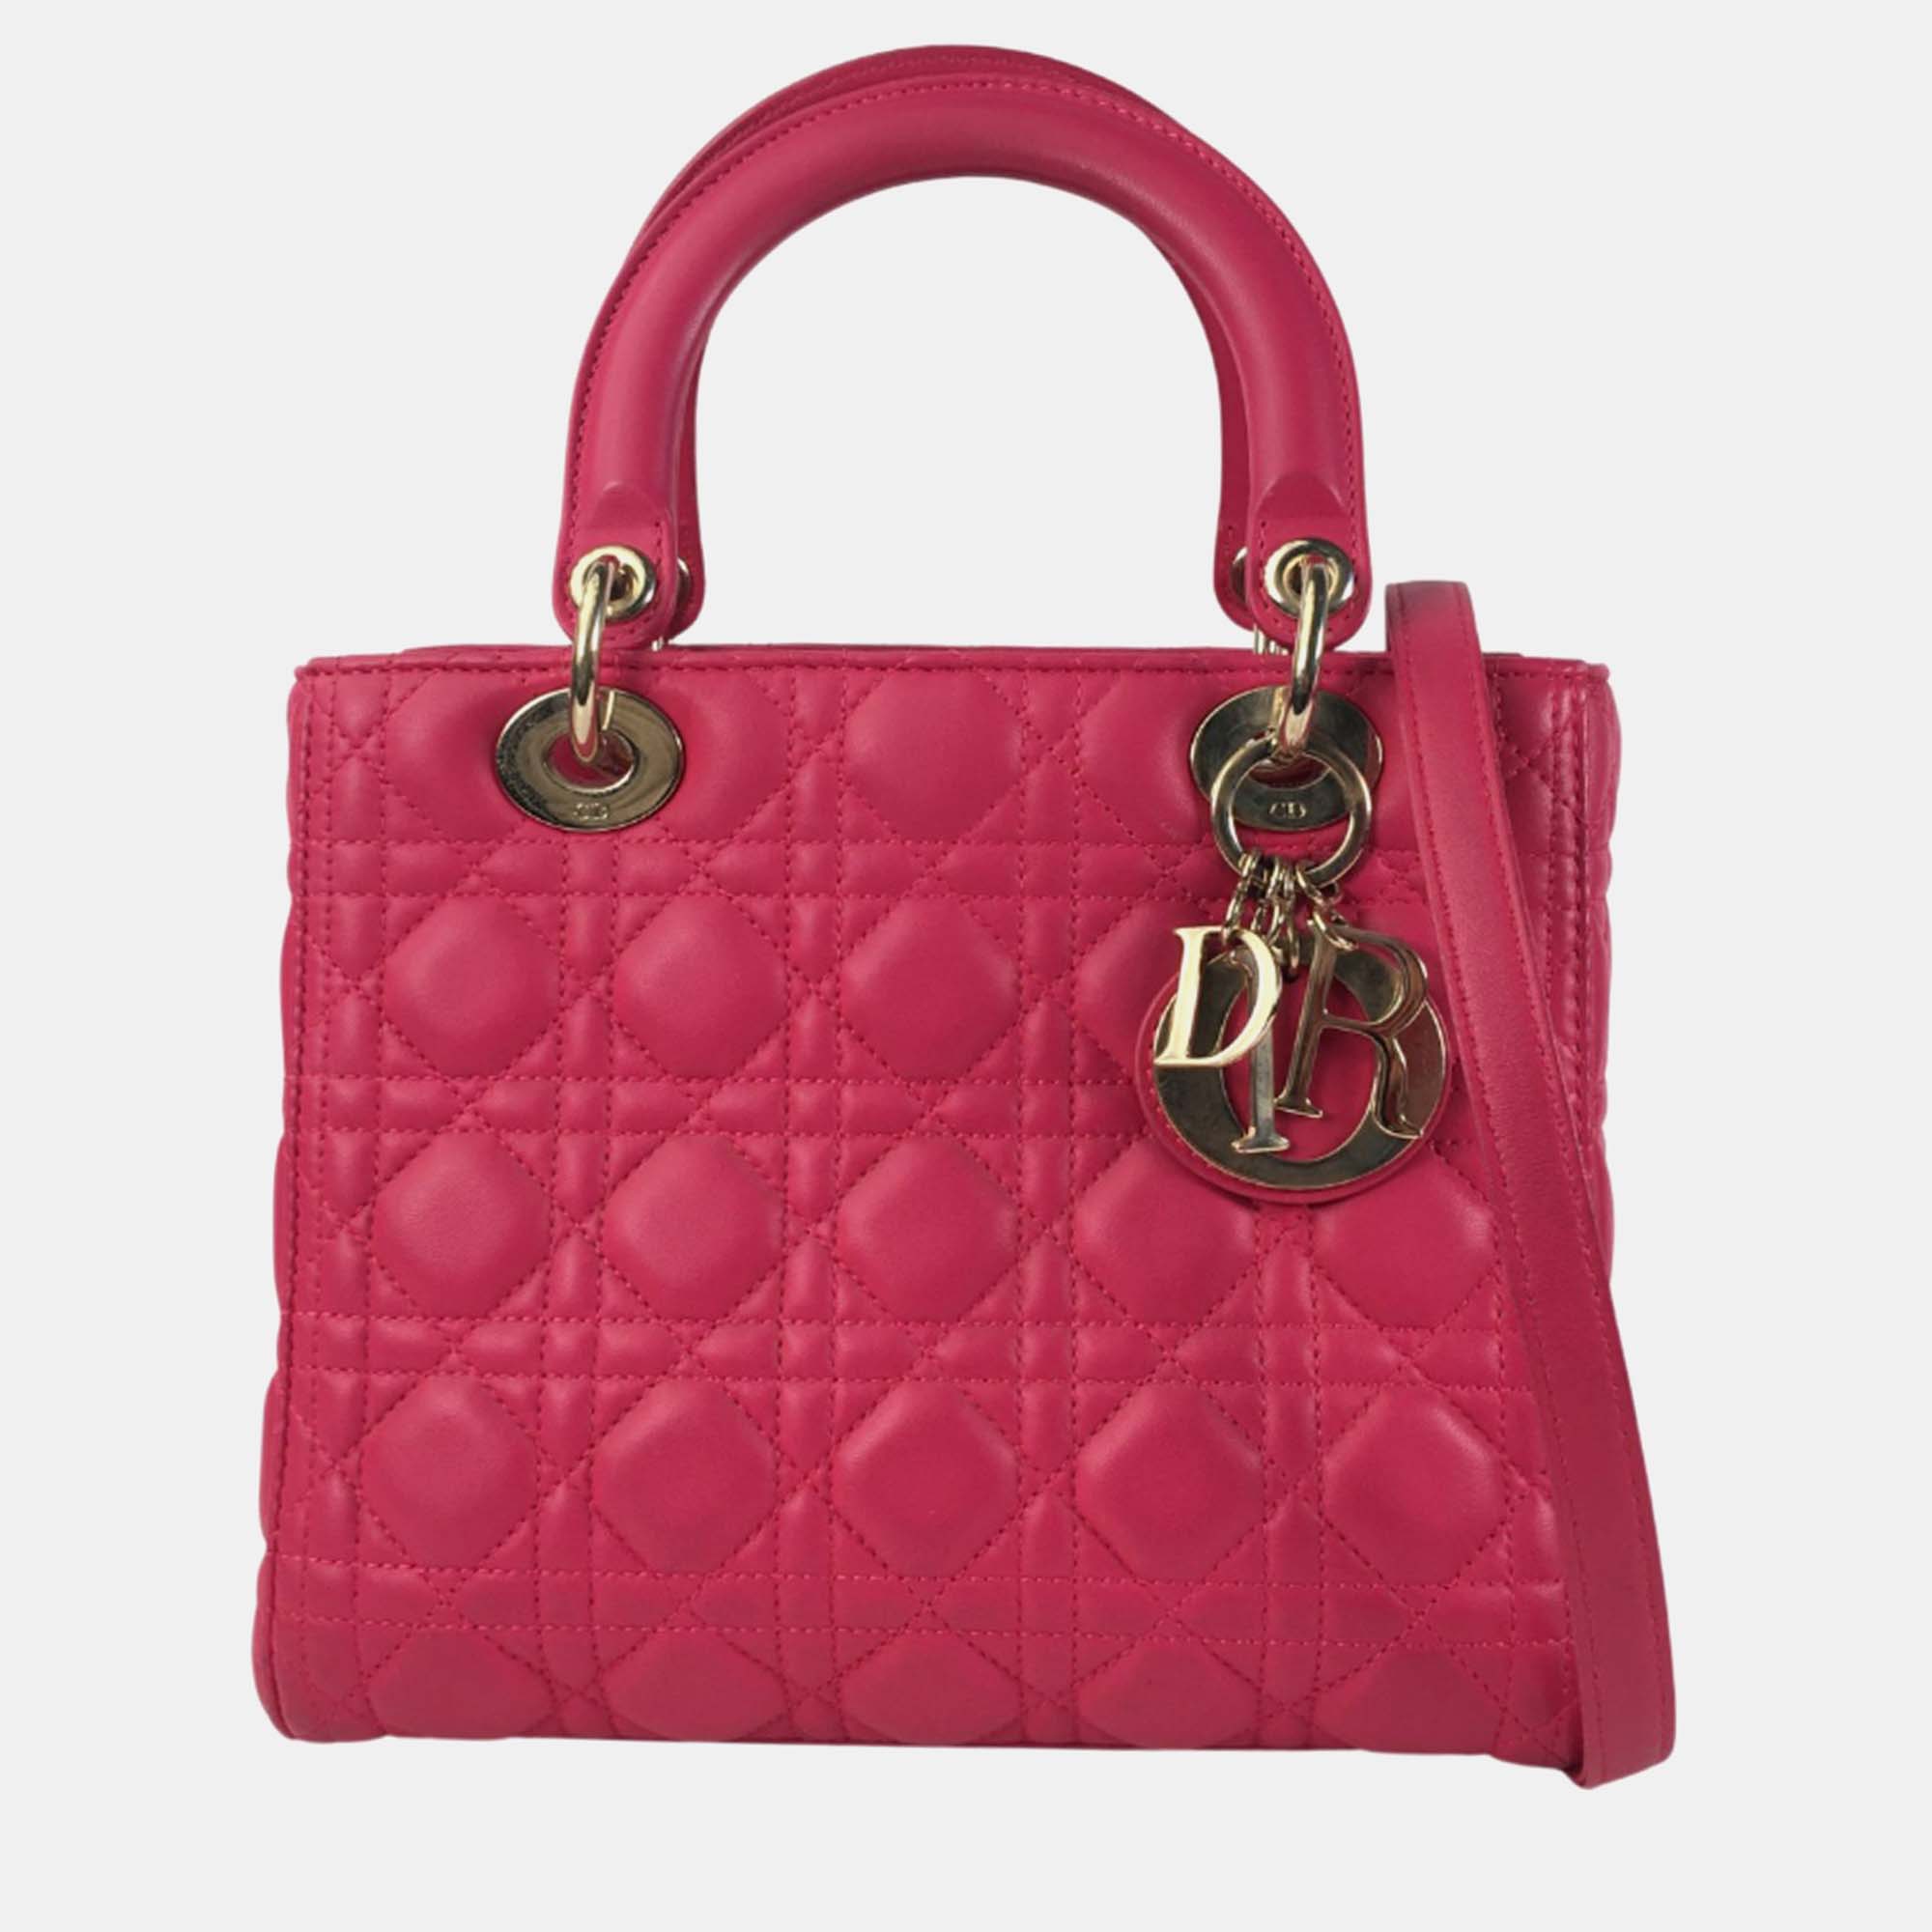 Dior pink leather medium lady dior tote bag